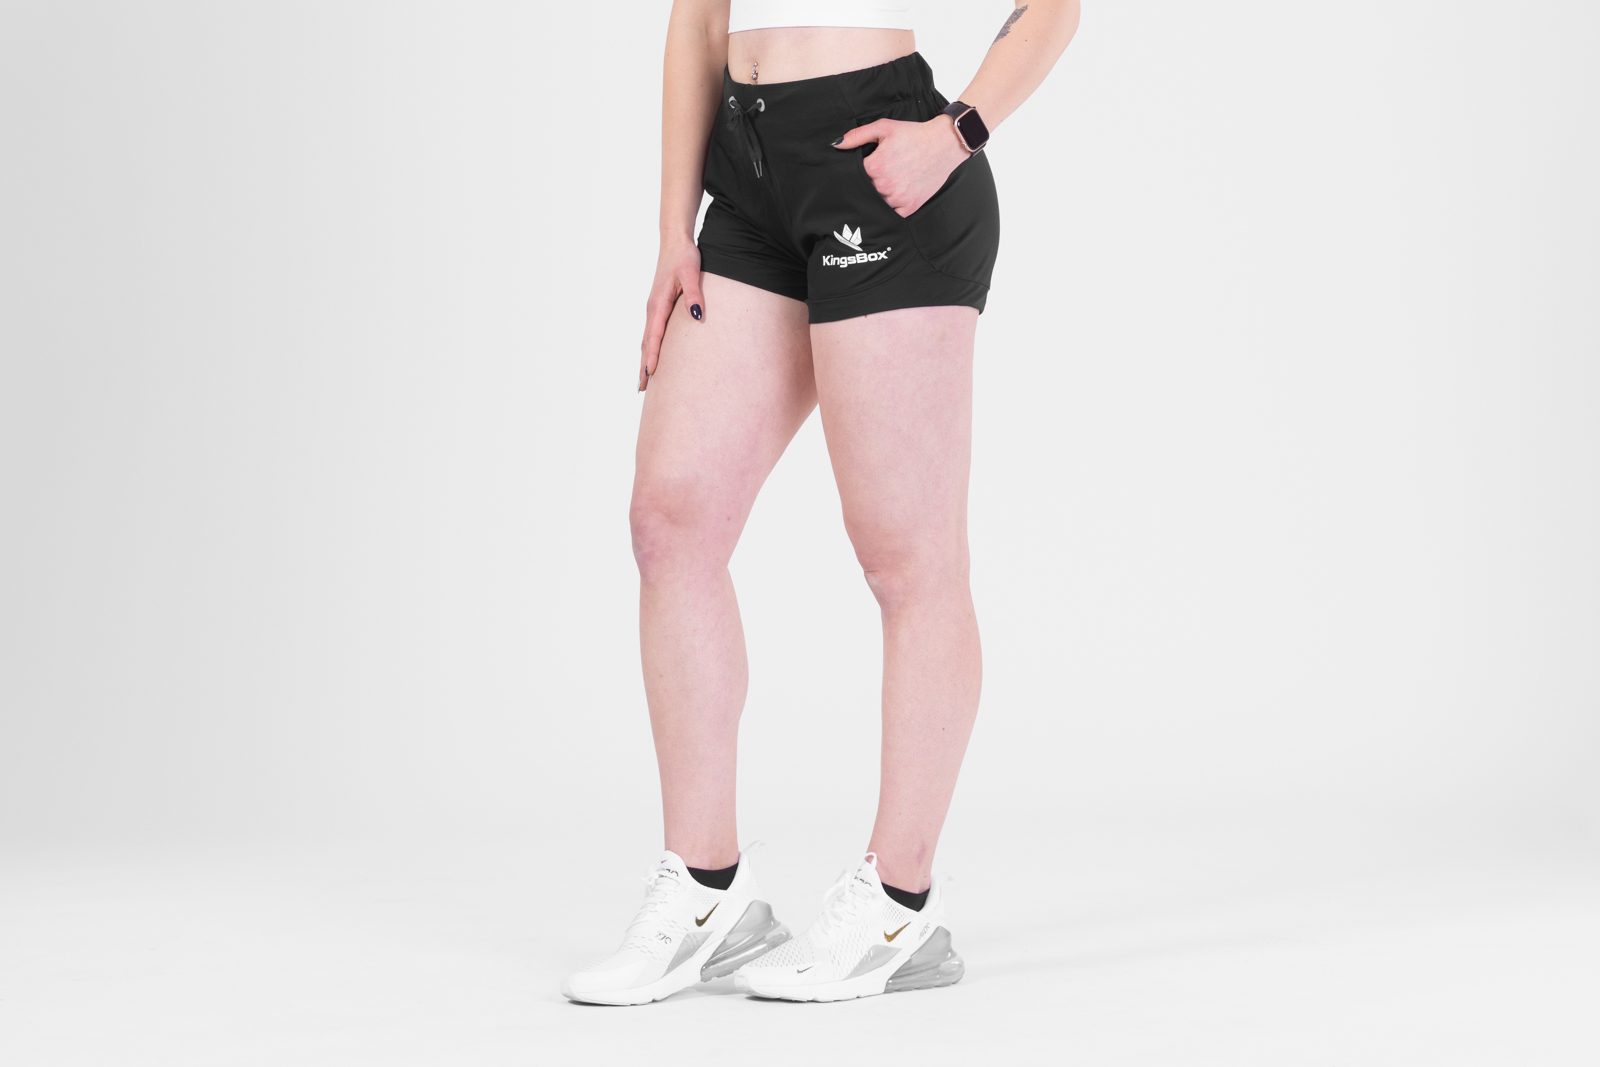 KingsBox Womens Workout Shorts